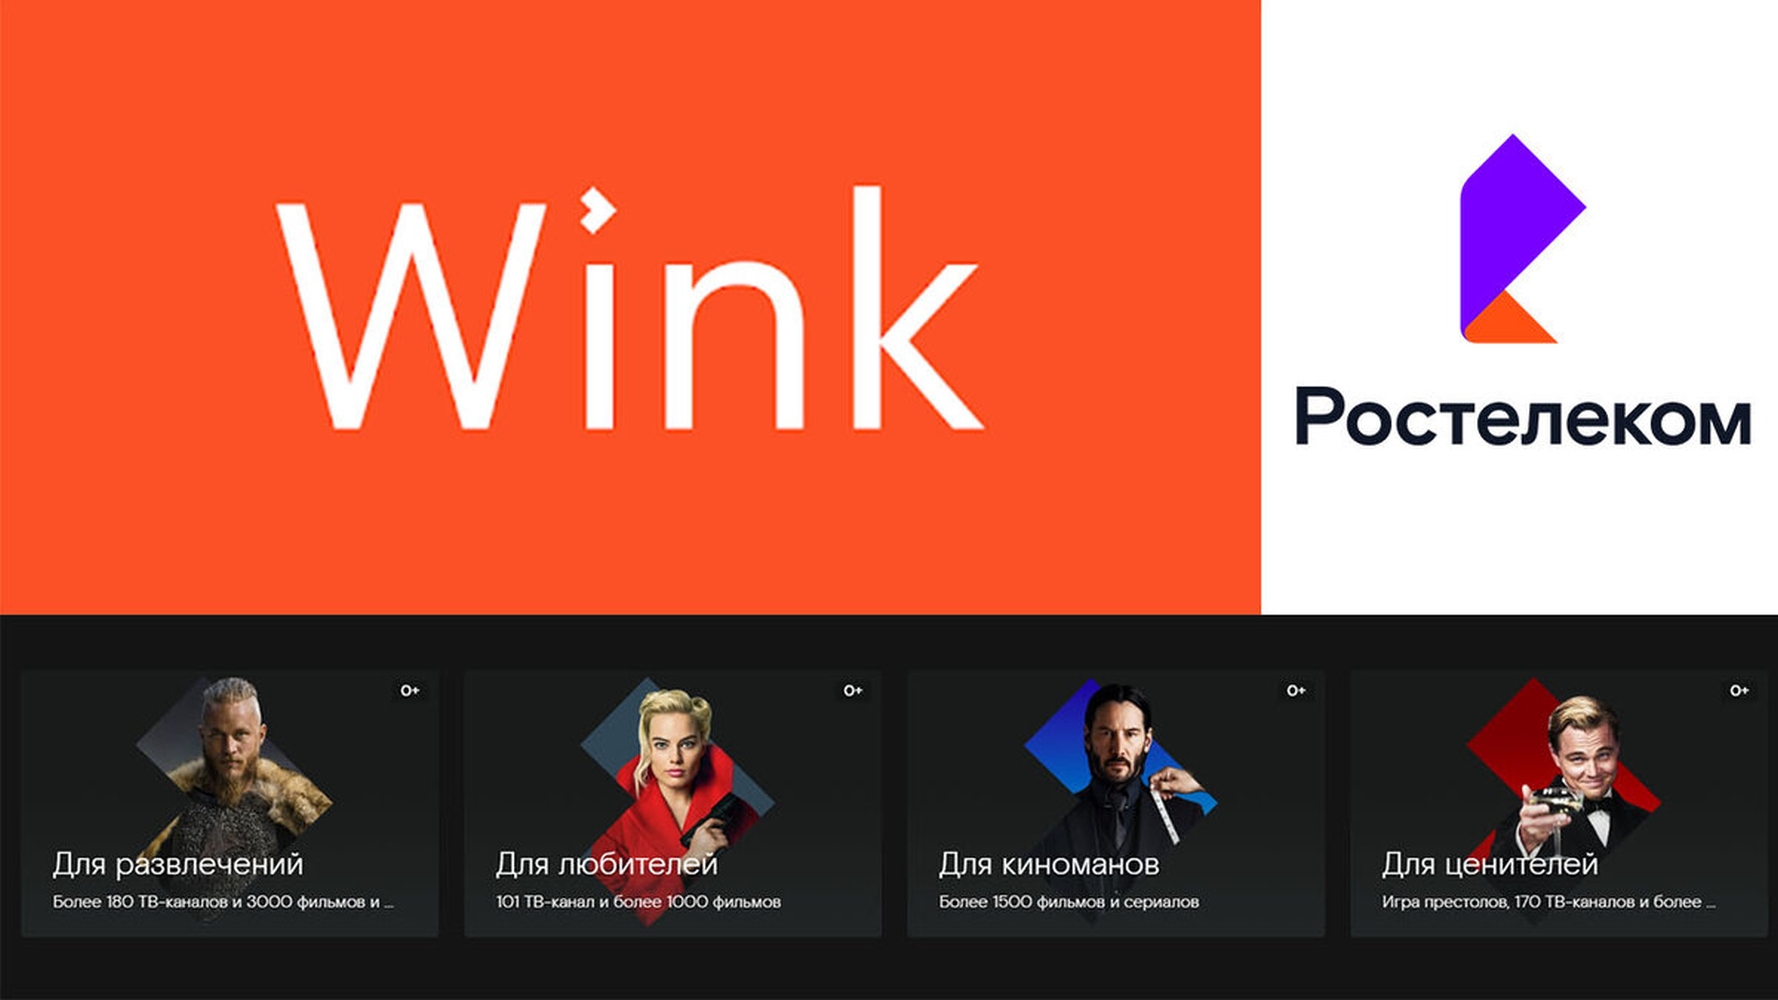 Wink качество видео. Wink Ростелеком. Онлайн кинотеатр wink. Приложение wink. Wink Ростелеком логотип.